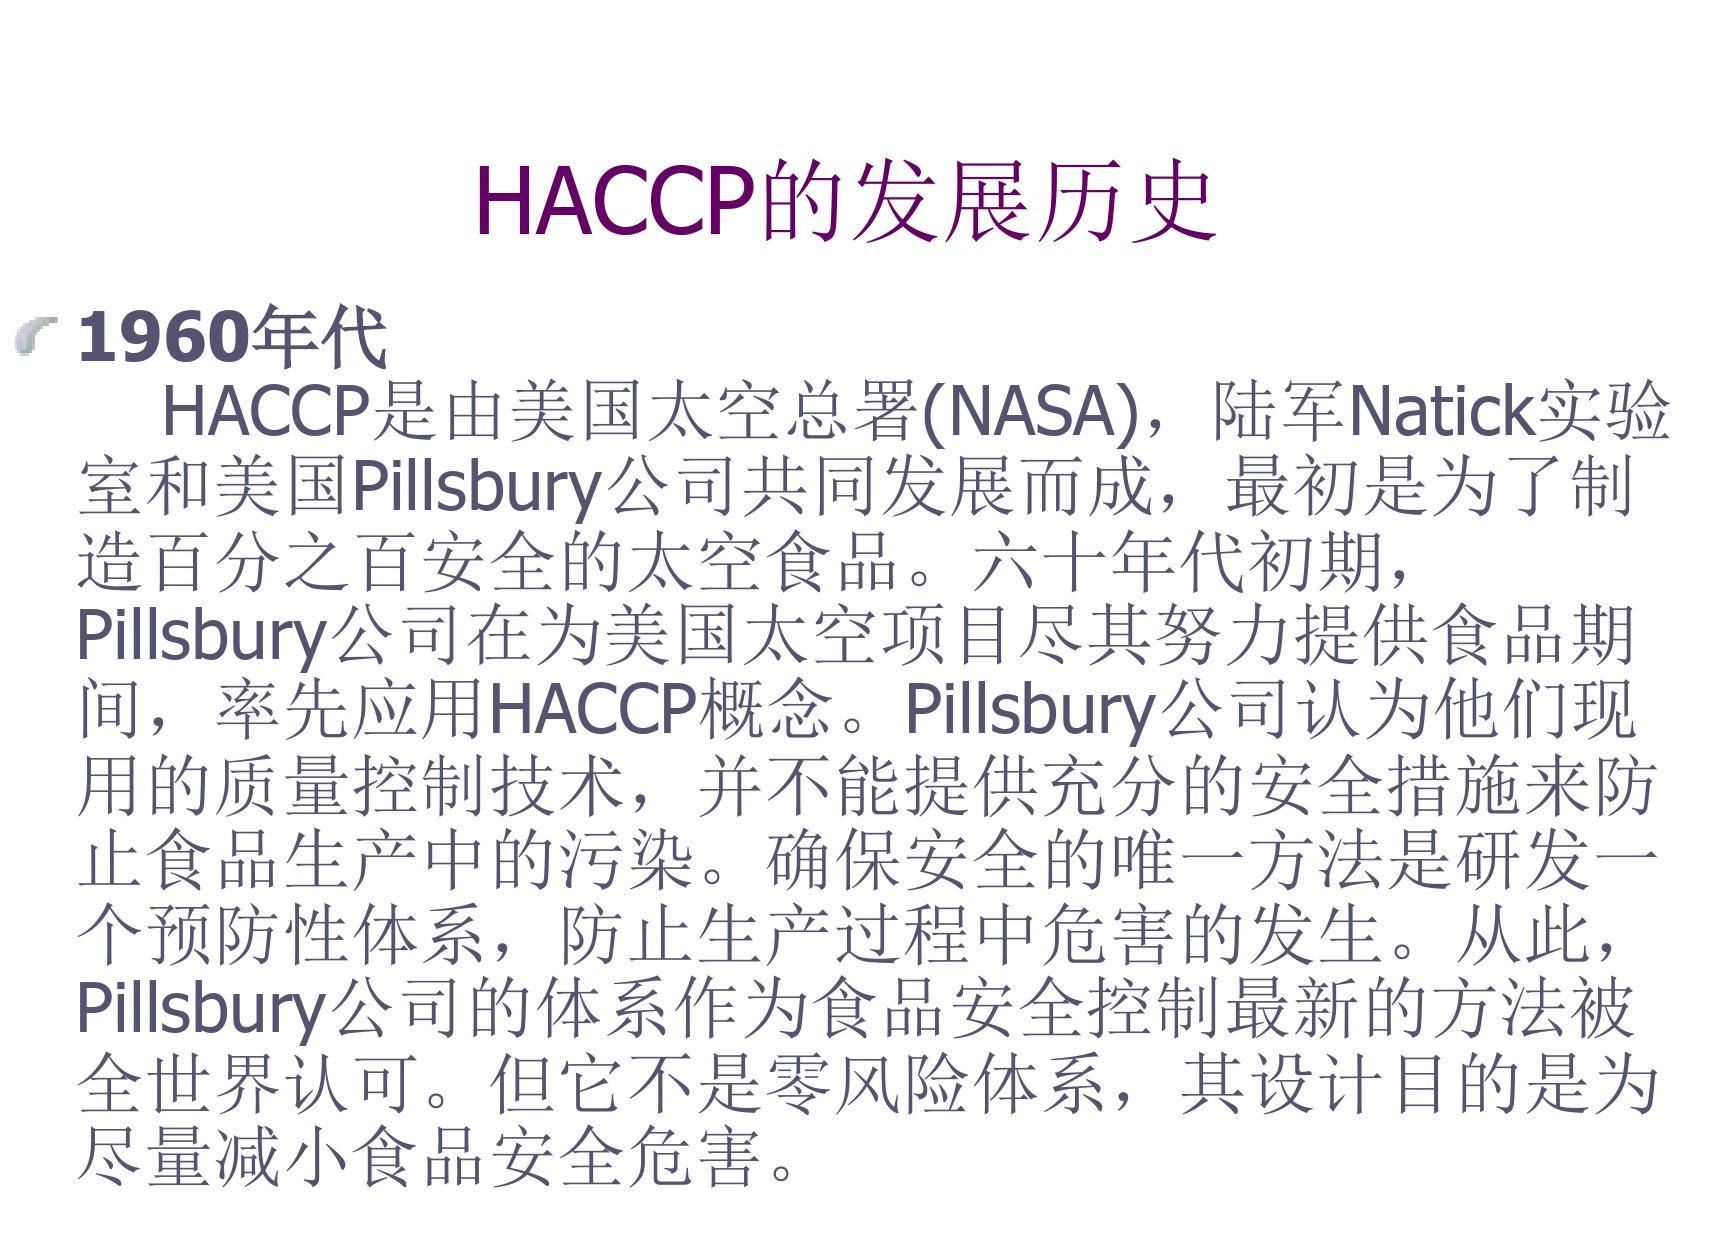 HACCP基础知识培训资料